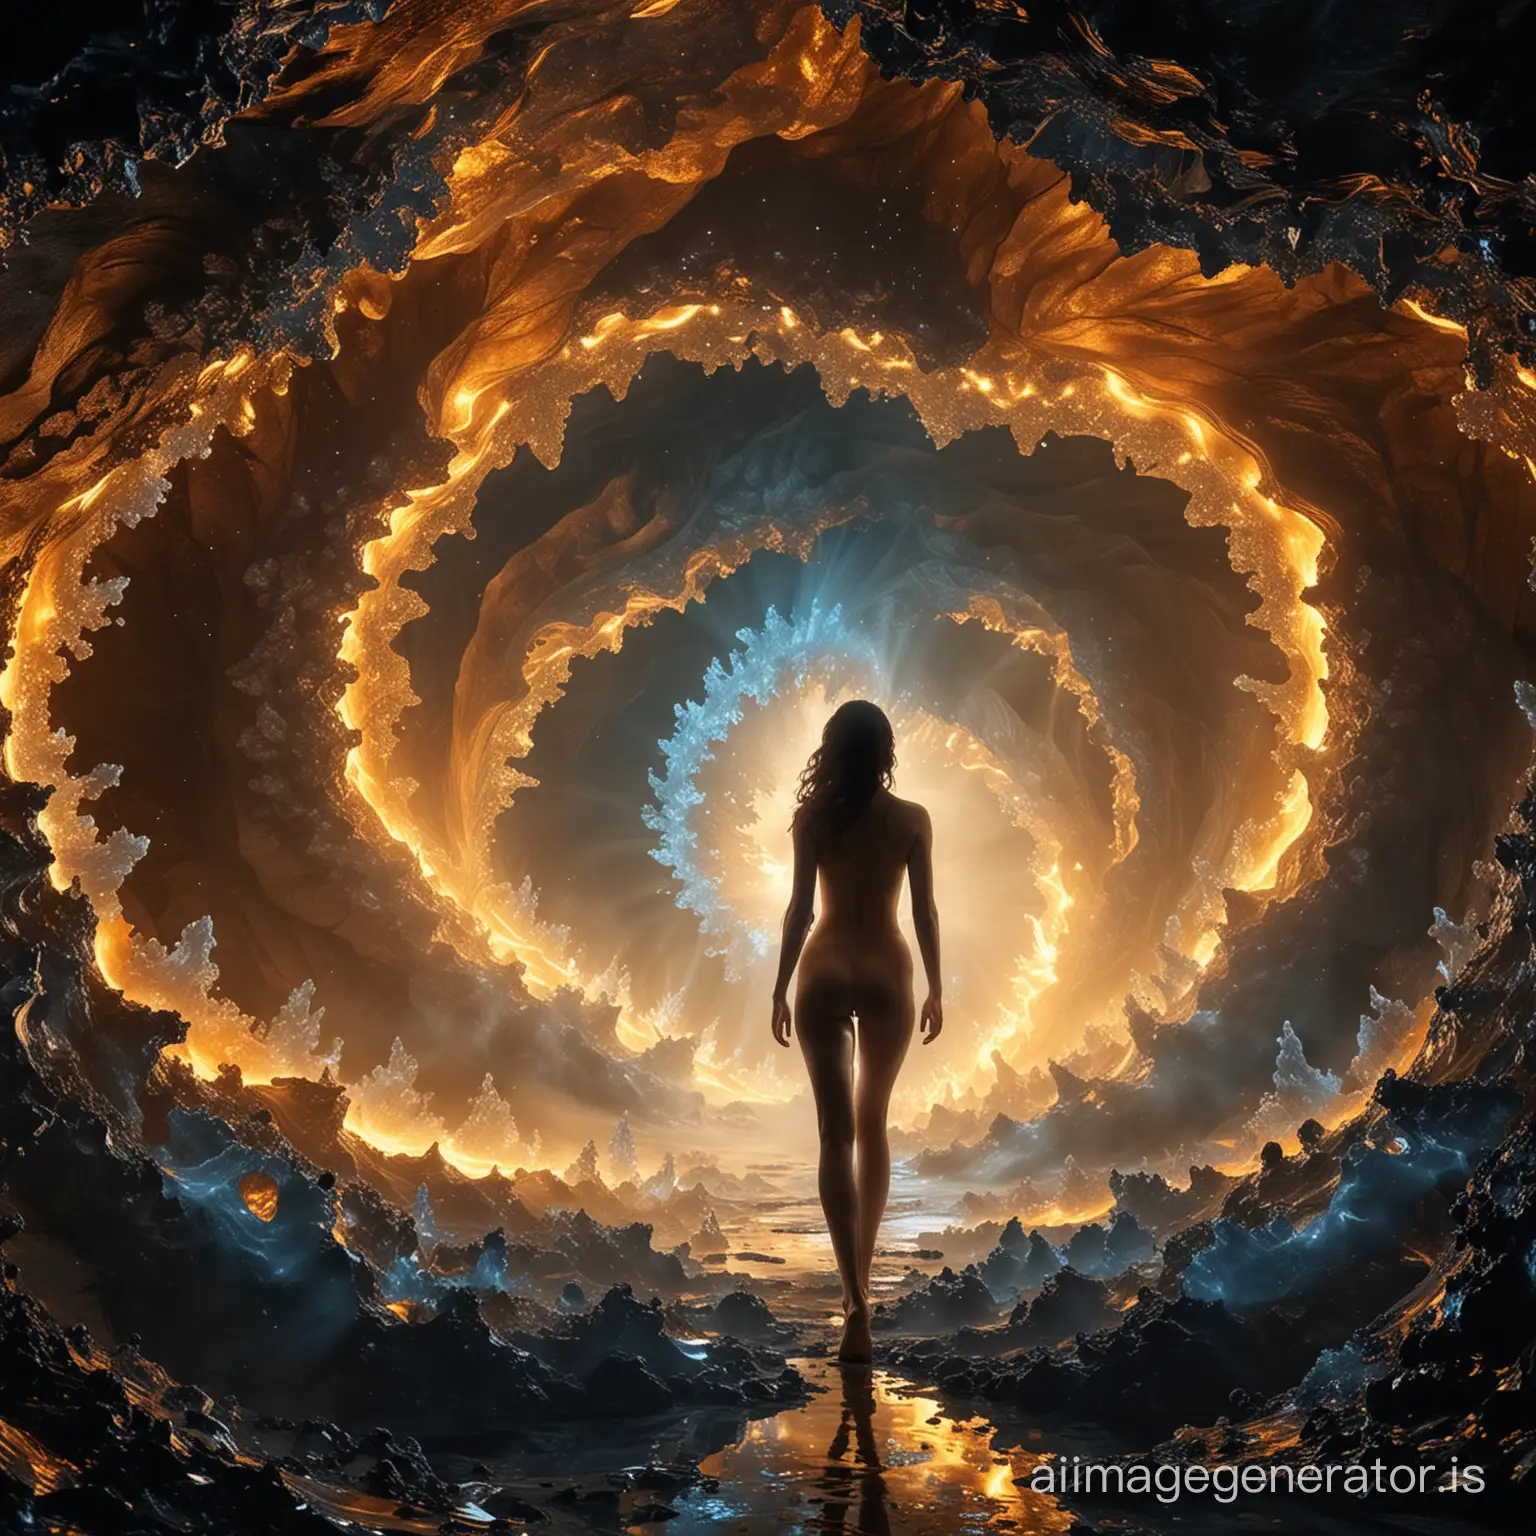 infinite mandelbrot saphire-gold burning fractals inside a futuristic swirl metallic glowing cave, naked girl,  ice, fire and volumetric smoke inside cave.